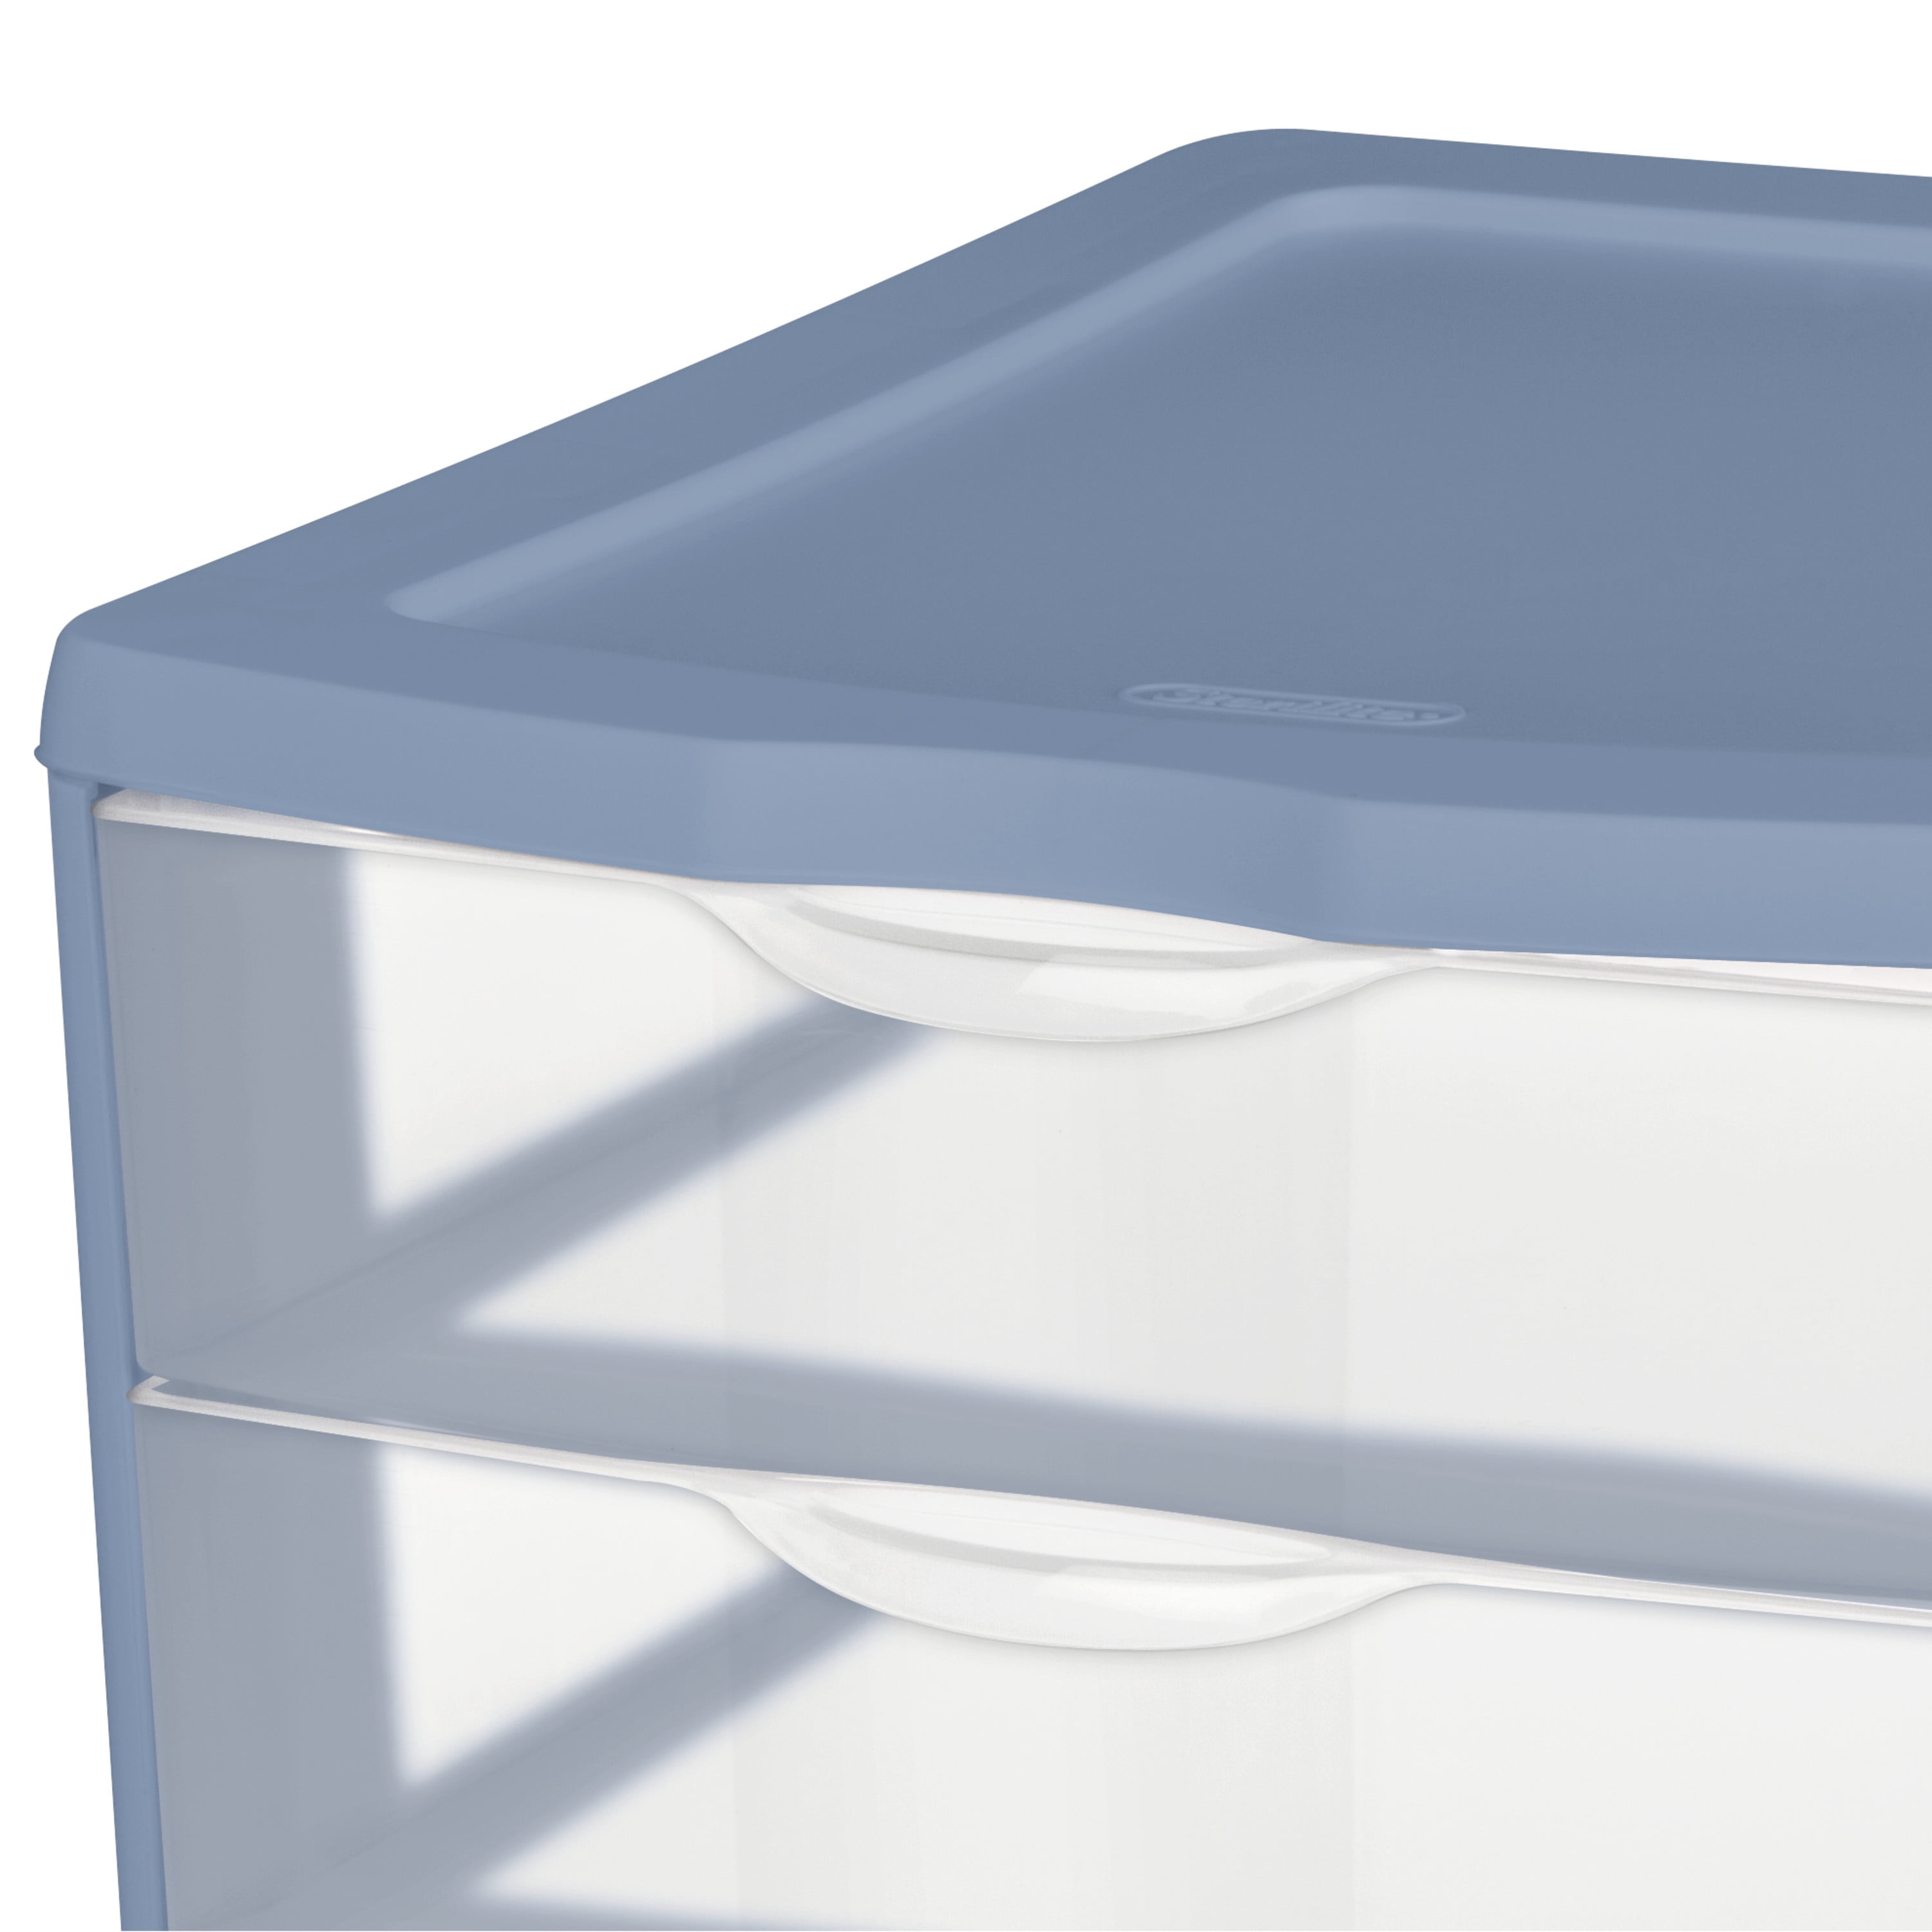 Plastic Drawers, Sterilite® Drawers, 3-Drawer Storage Carts in Stock - ULINE